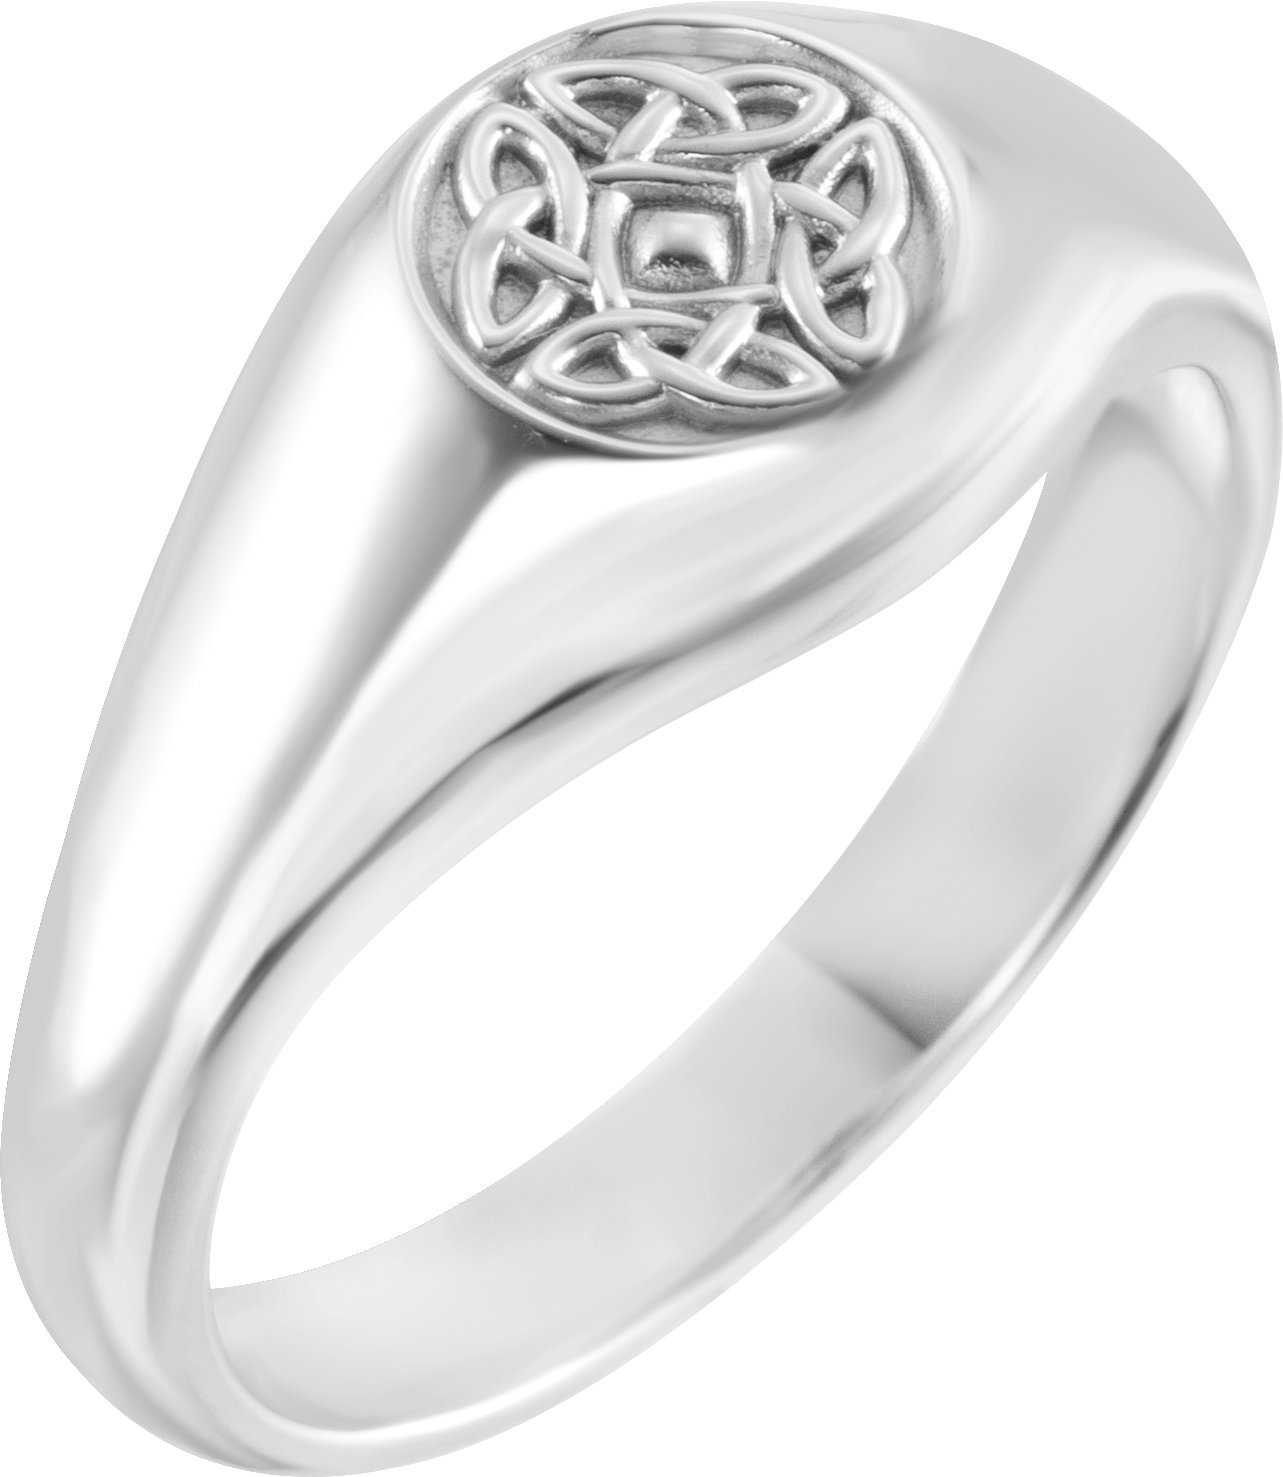 Sterling Silver Celtic-Inspired Ring